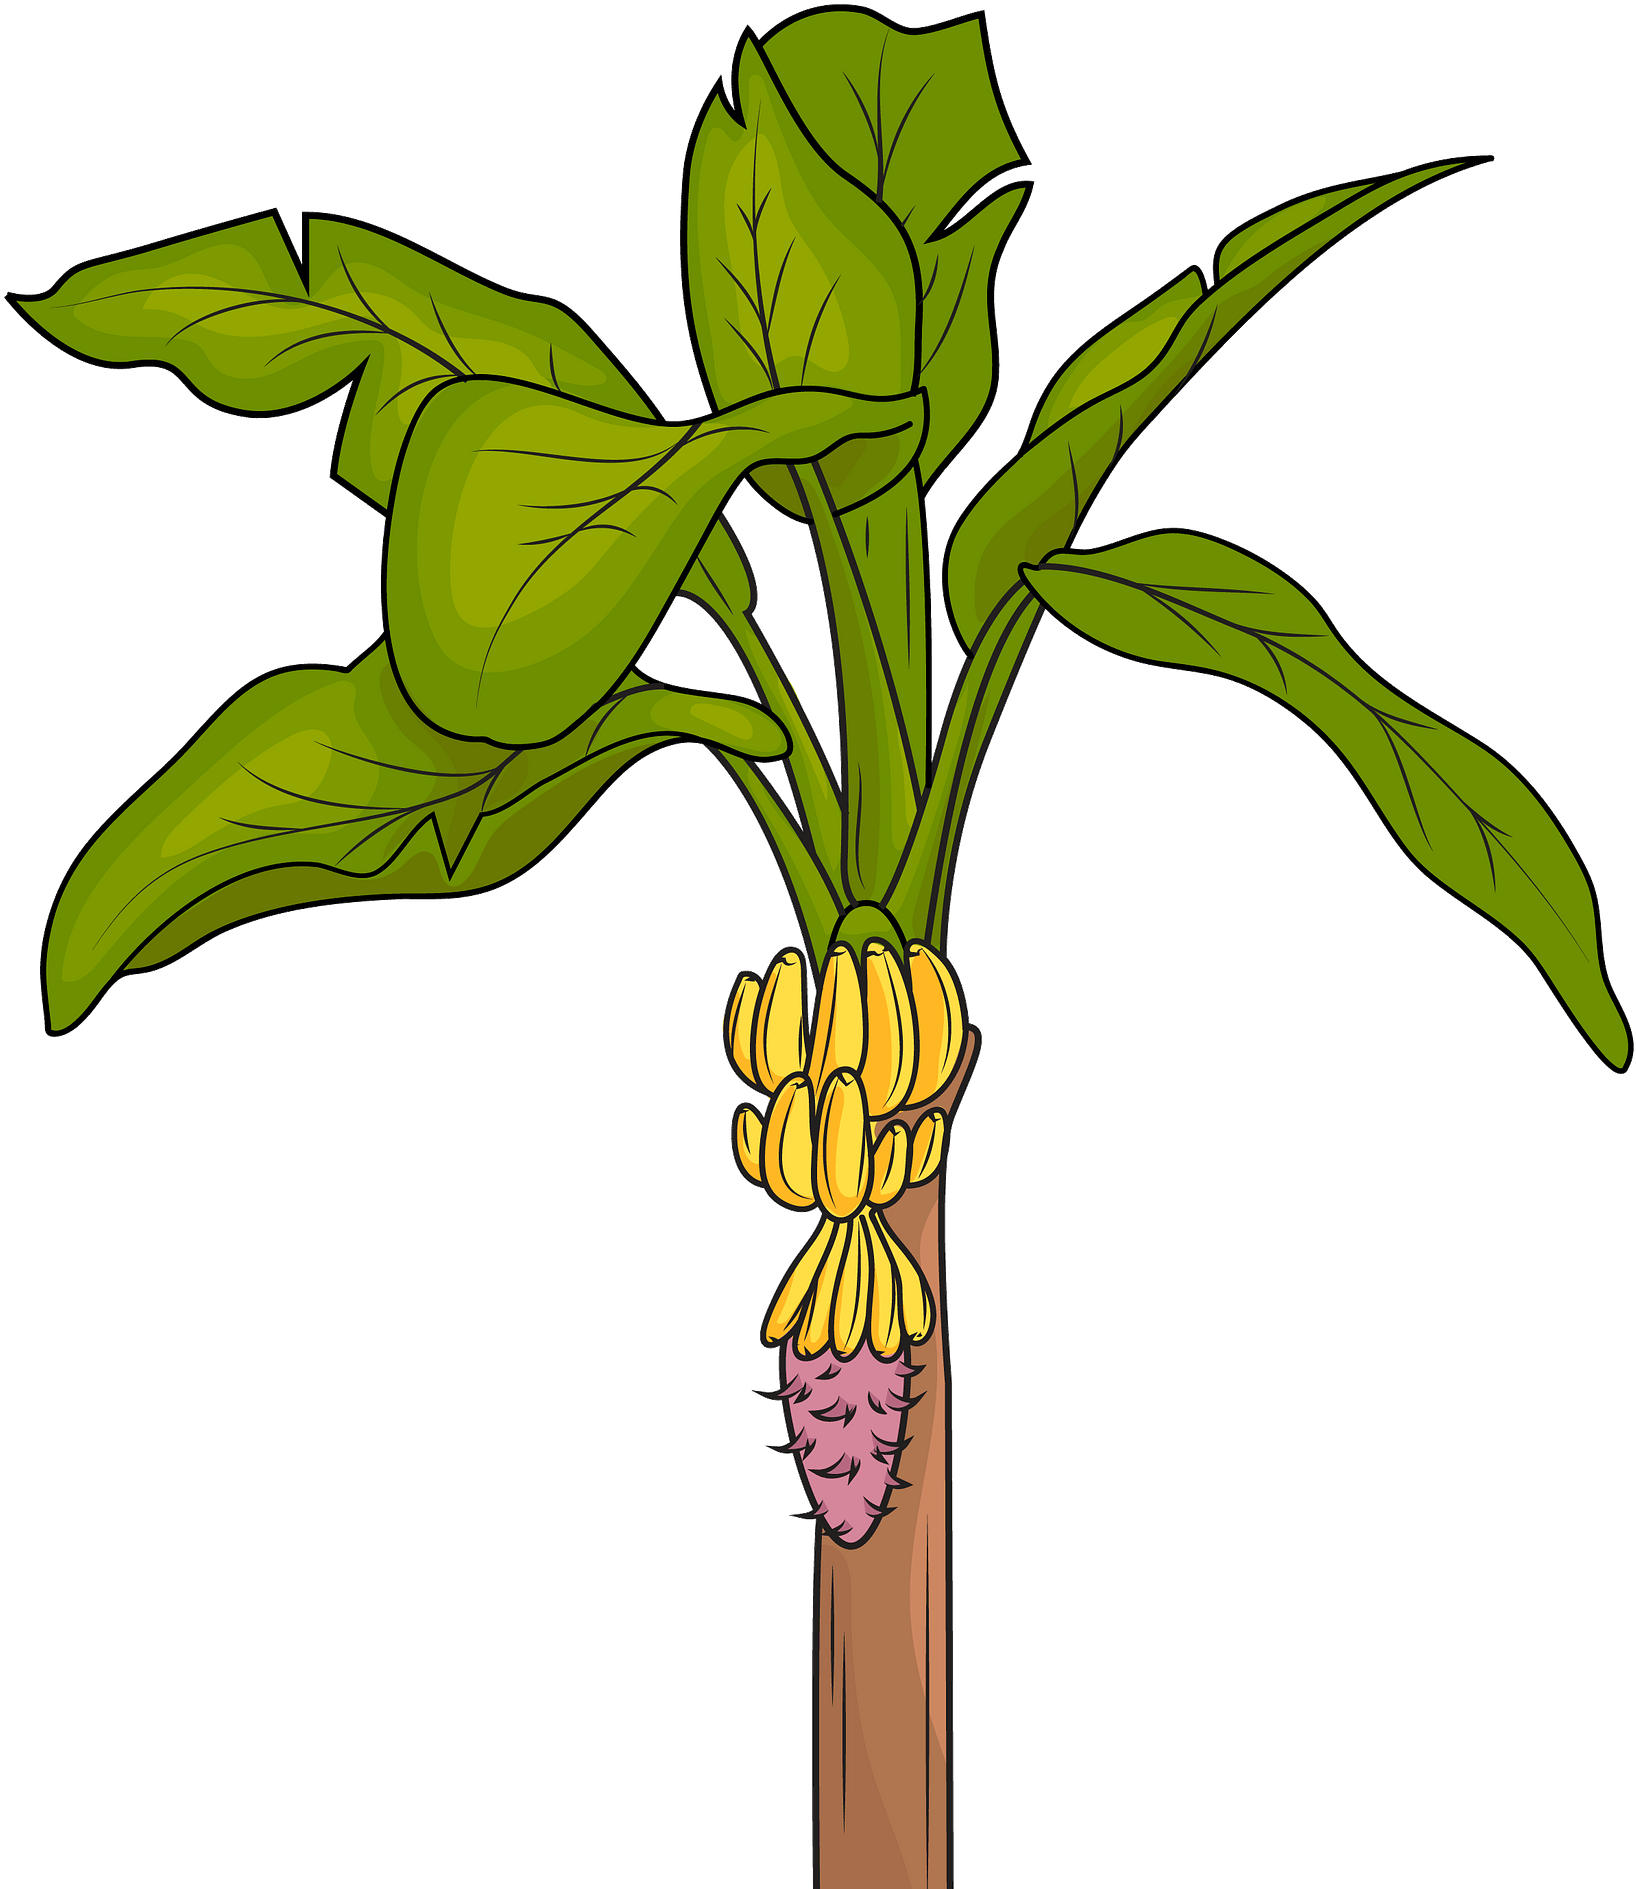 Digital Art Of Banana Tree